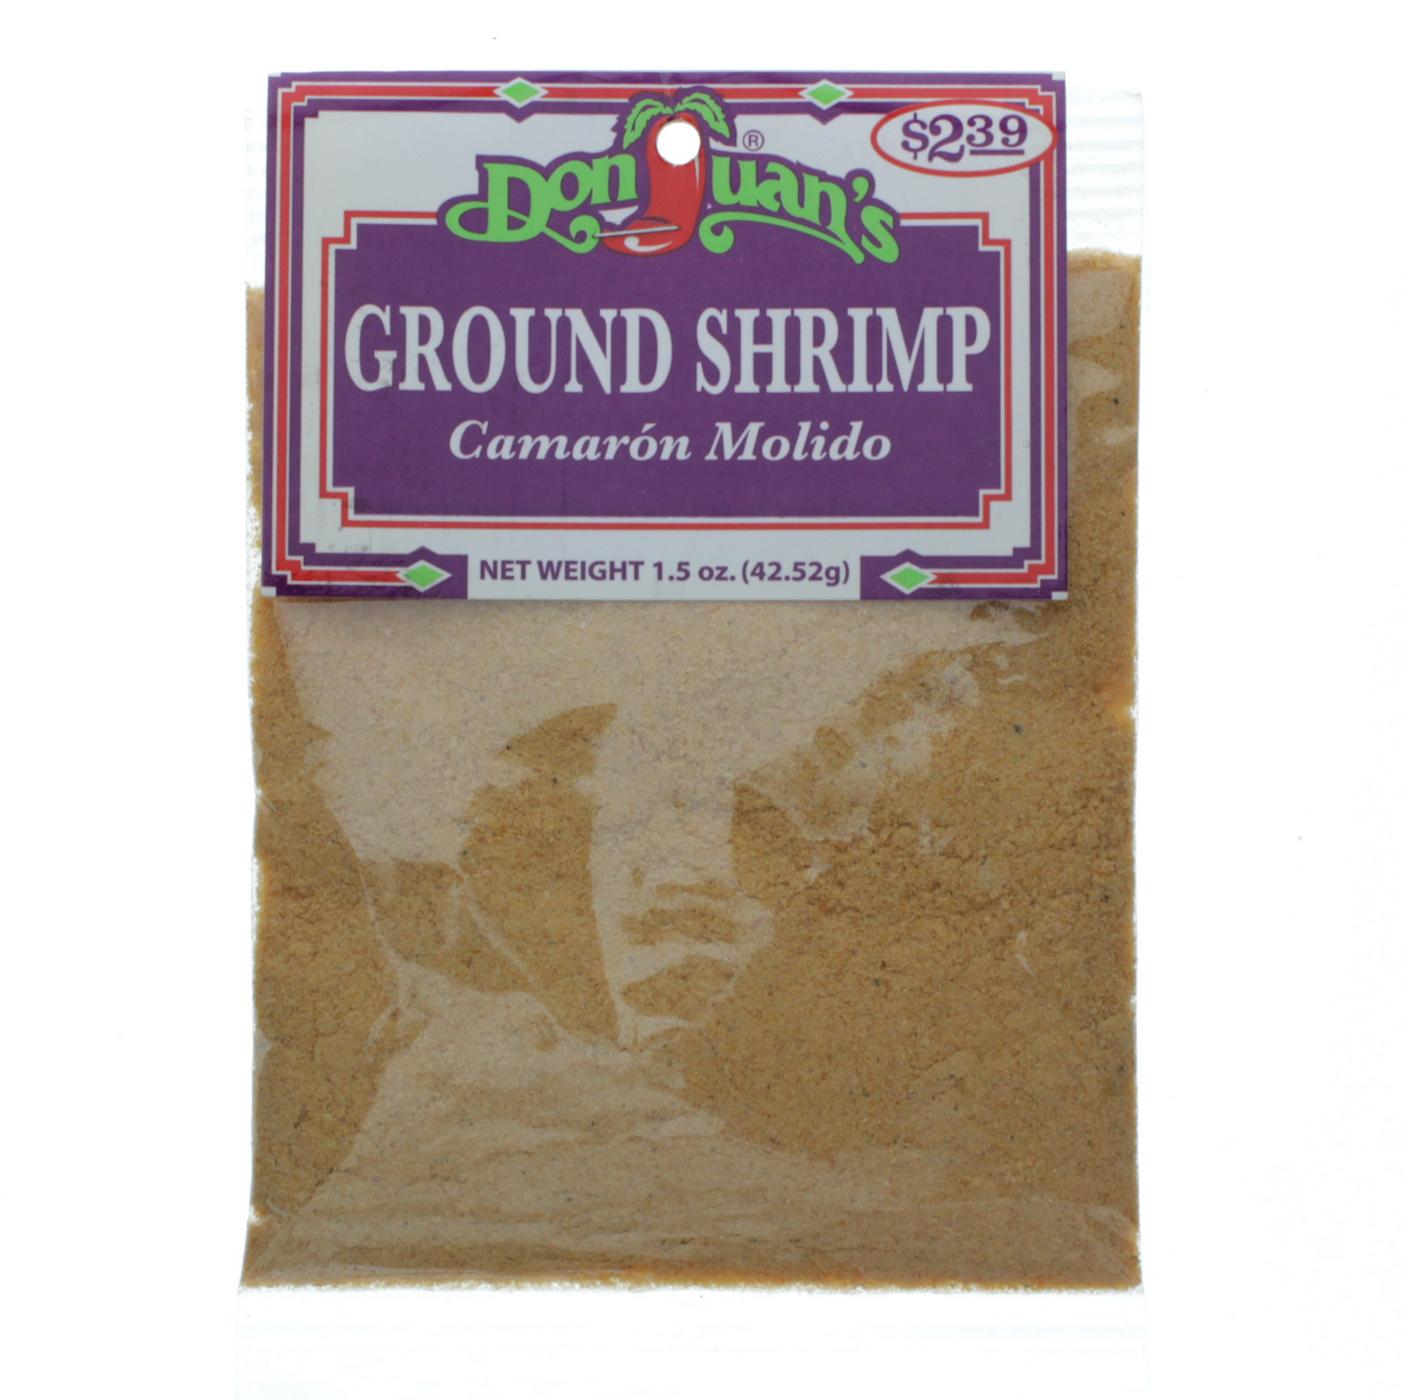 Don Juan's Ground Shrimp; image 1 of 2